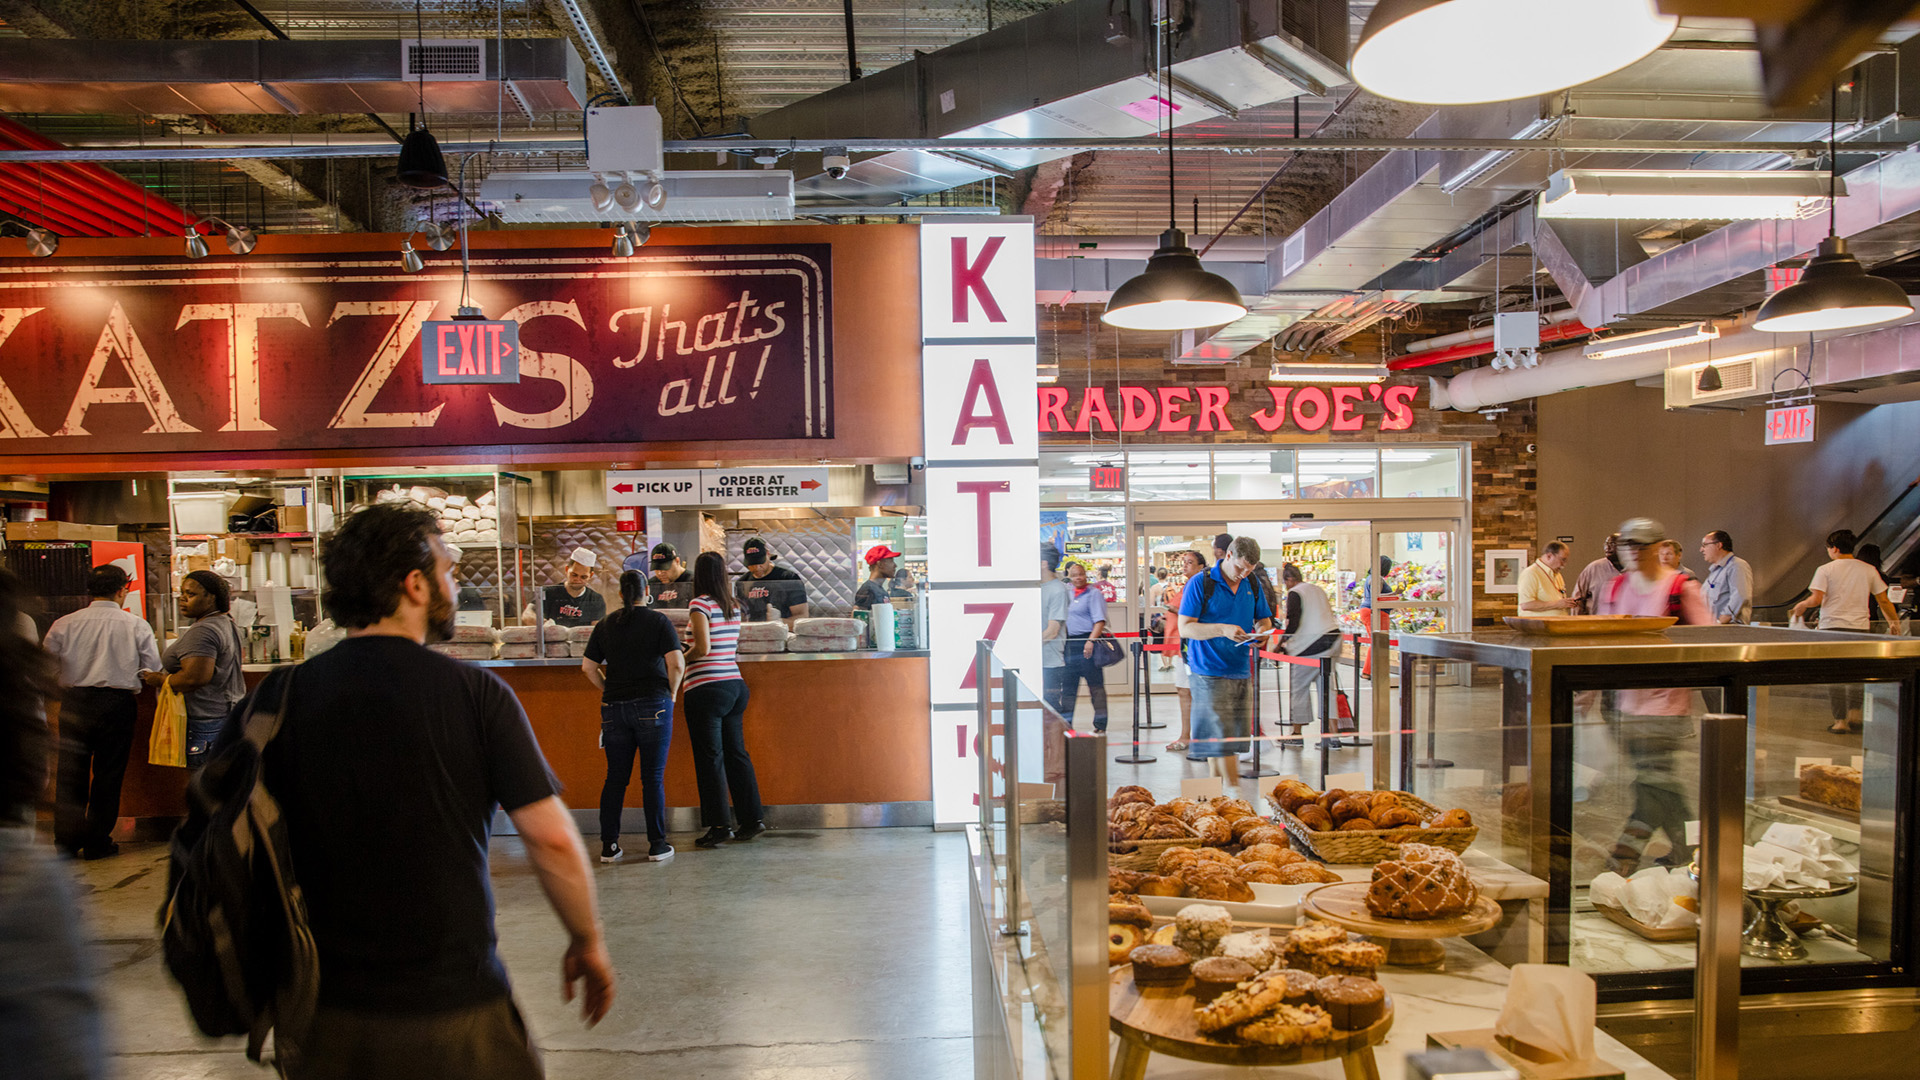 Inside Dekalb Market Hall - Katz Delicatessen, Trader Hoes, a kiosk with pastries 